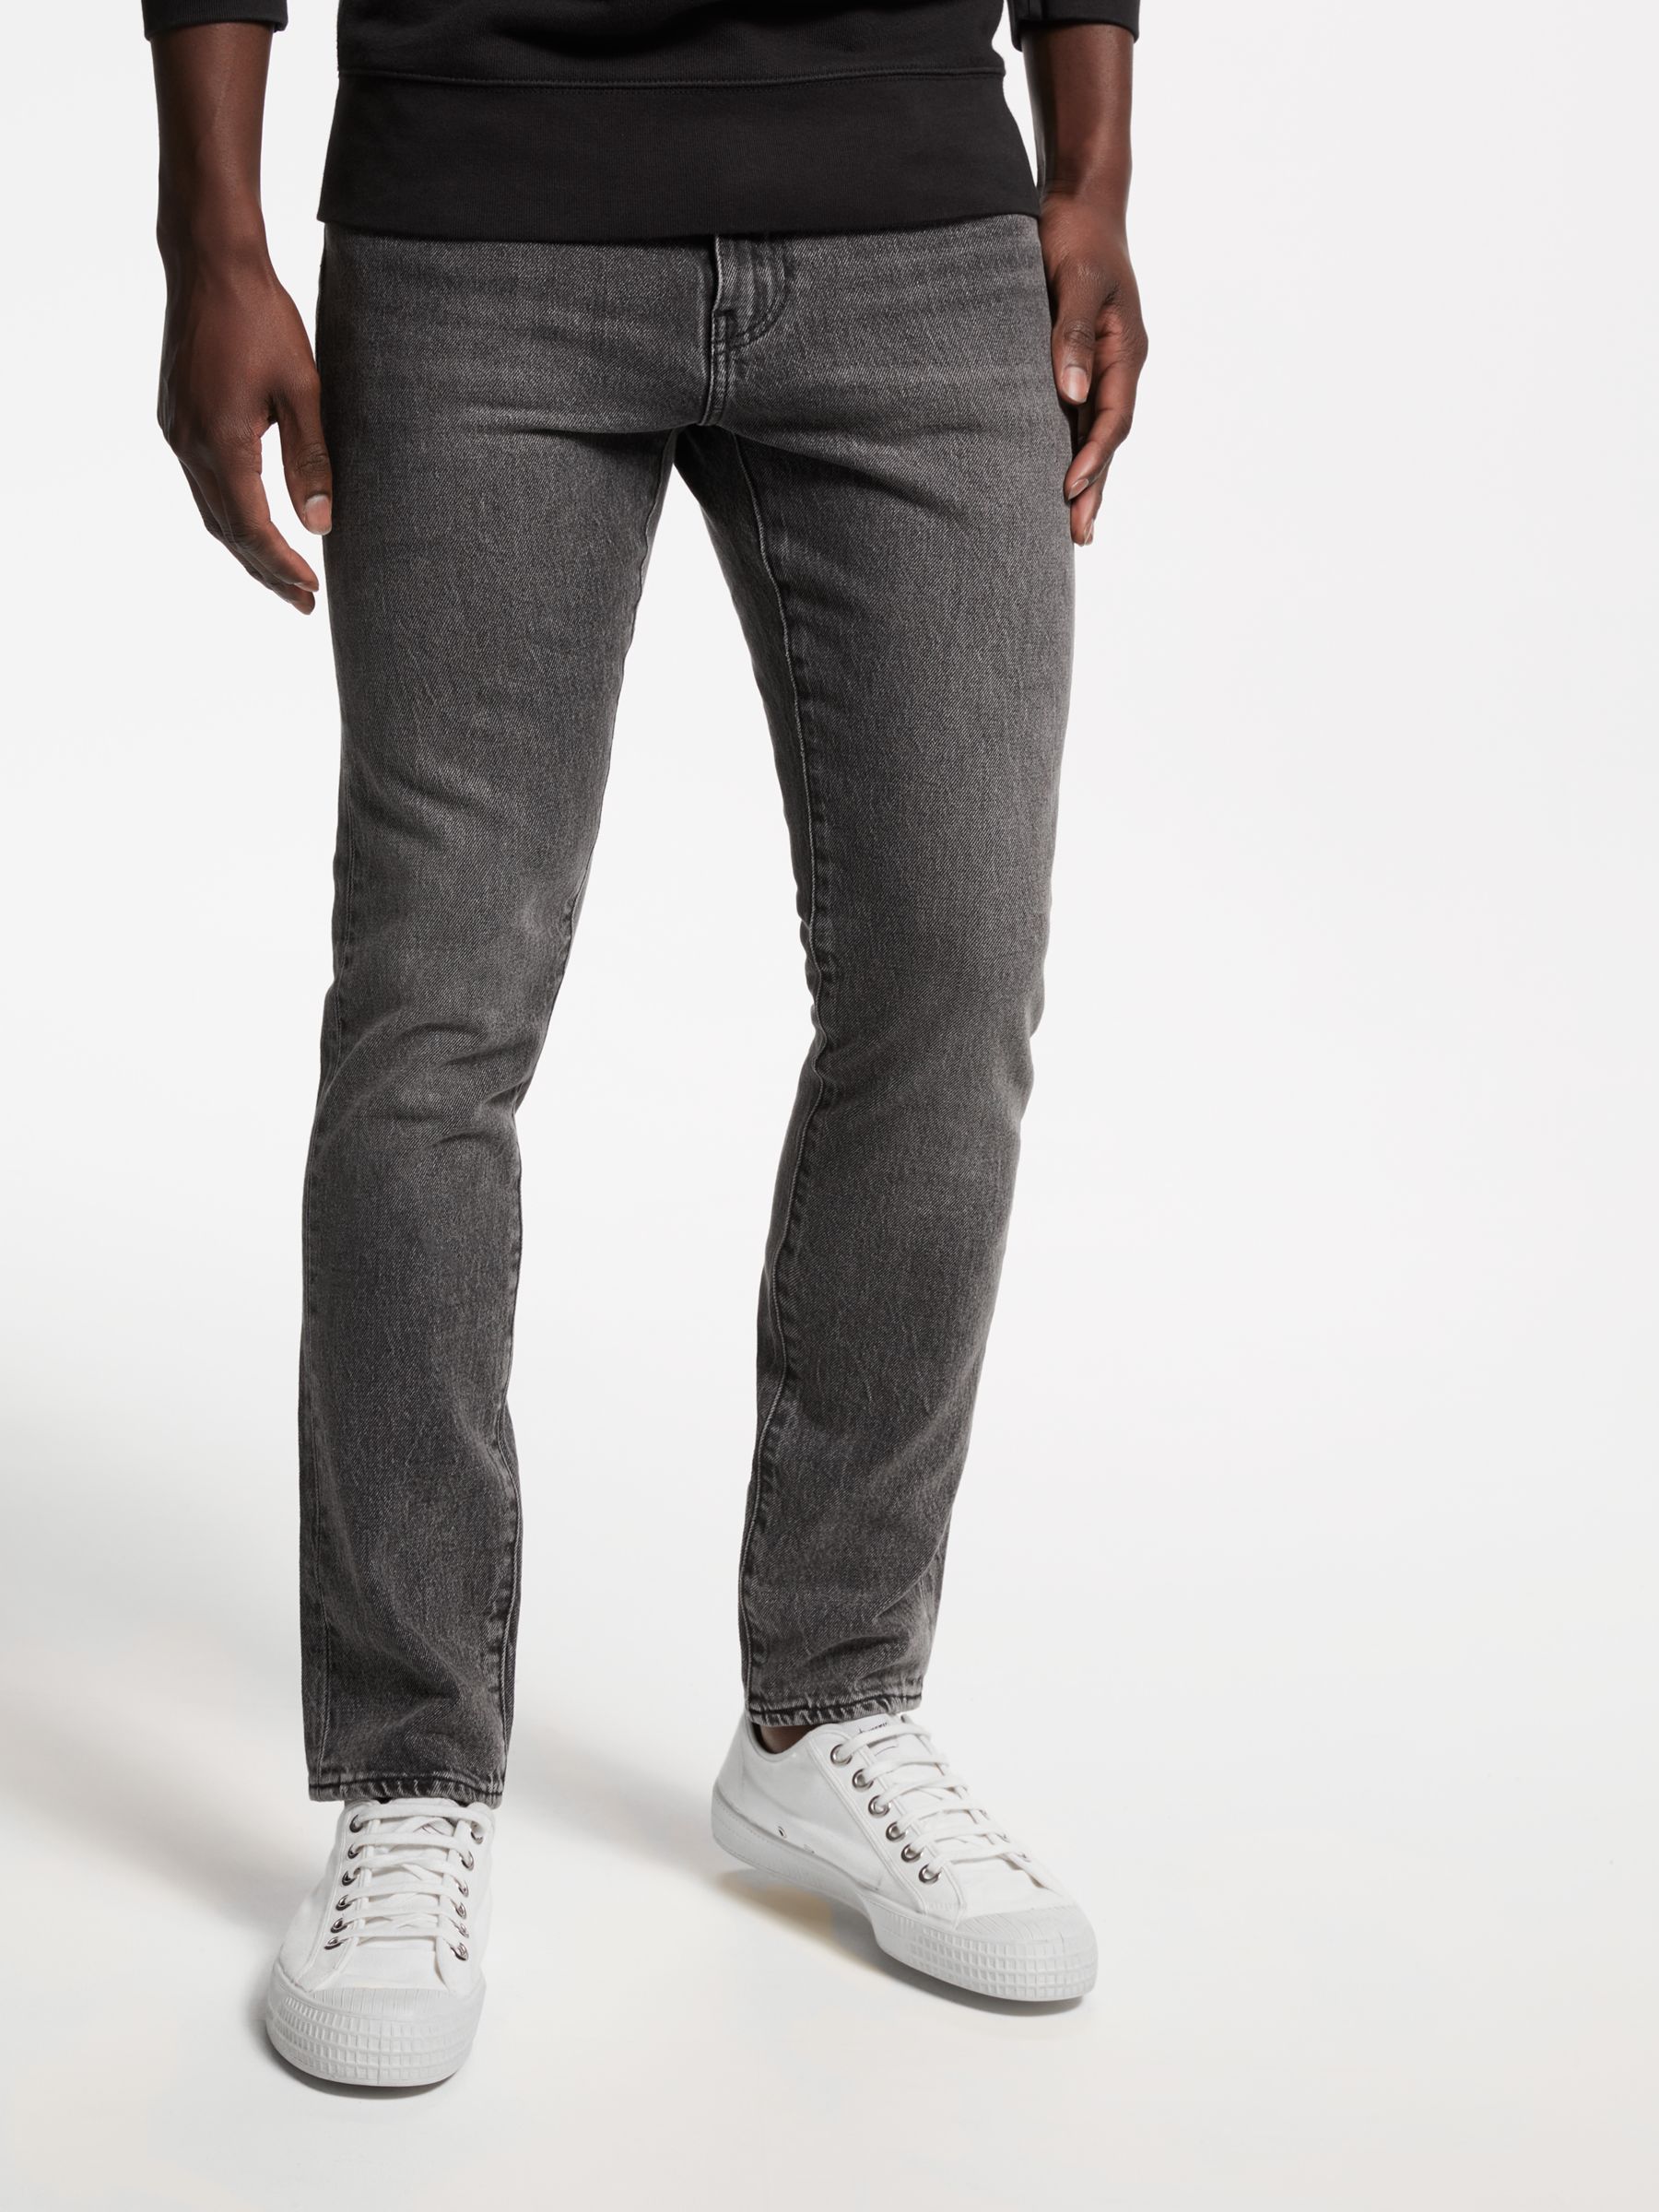 Levi's 510 Skinny Jeans, Grey at John 